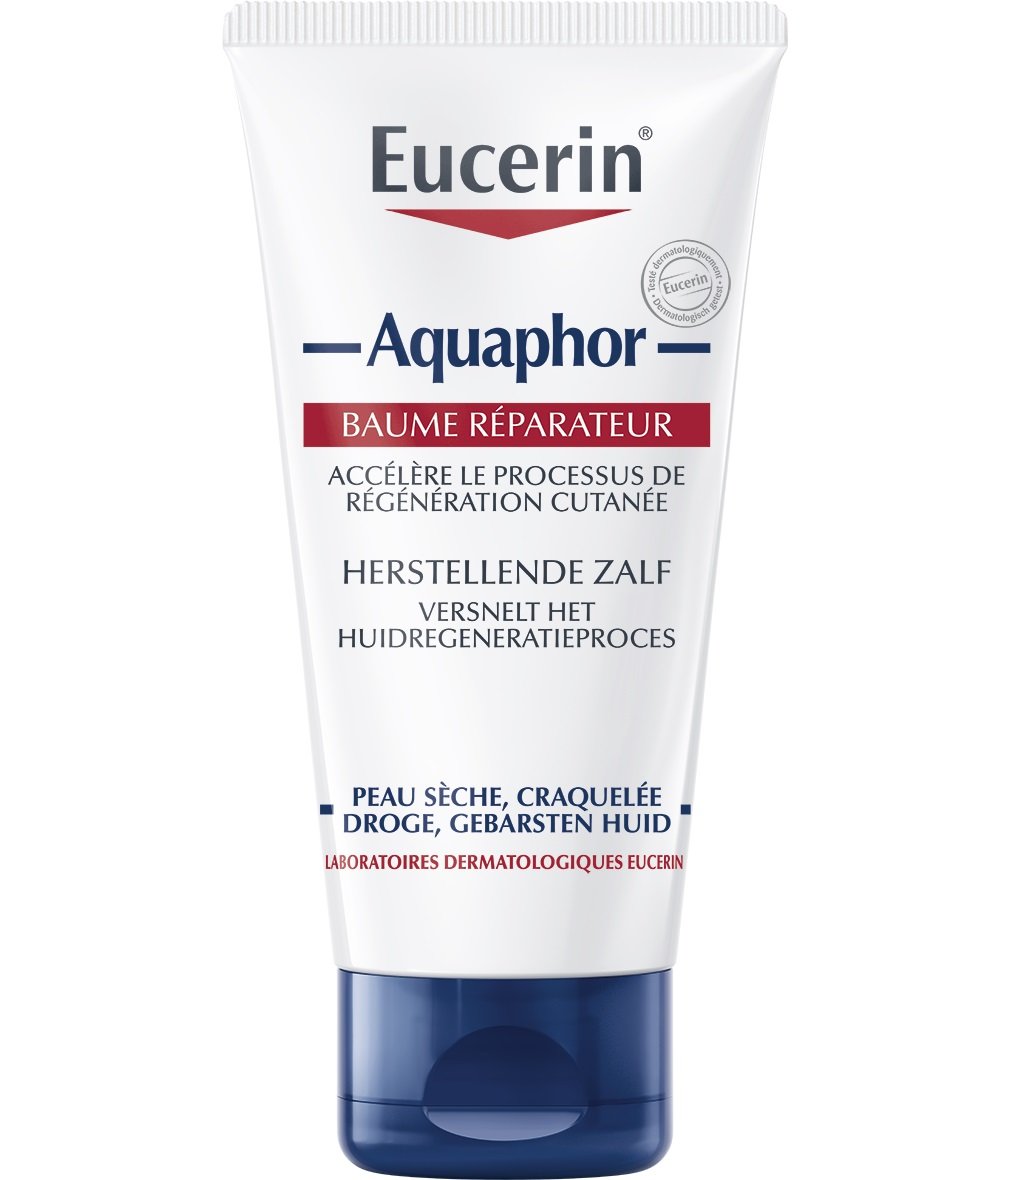 Eucerin Aquaphor Huidherstellende Zalf - SkinEffects Zwolle